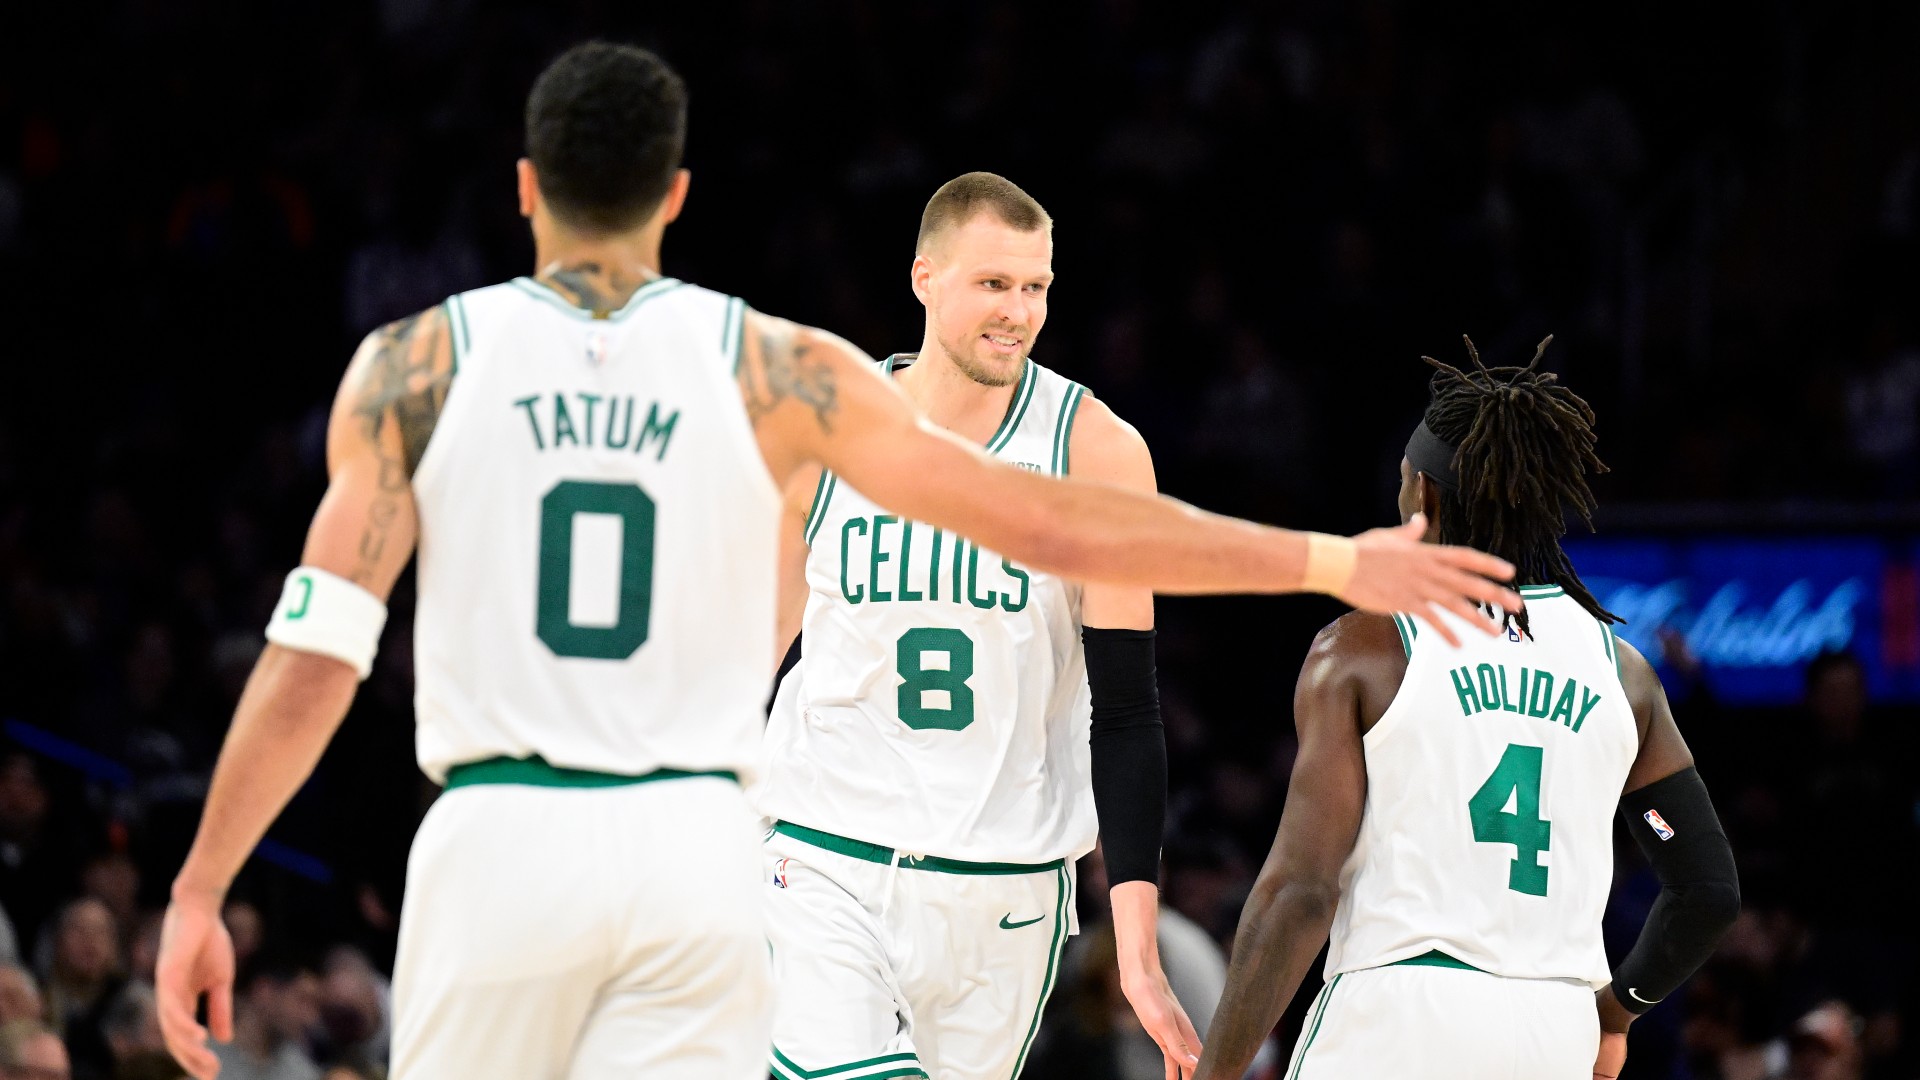 Celtics win 8th straight game